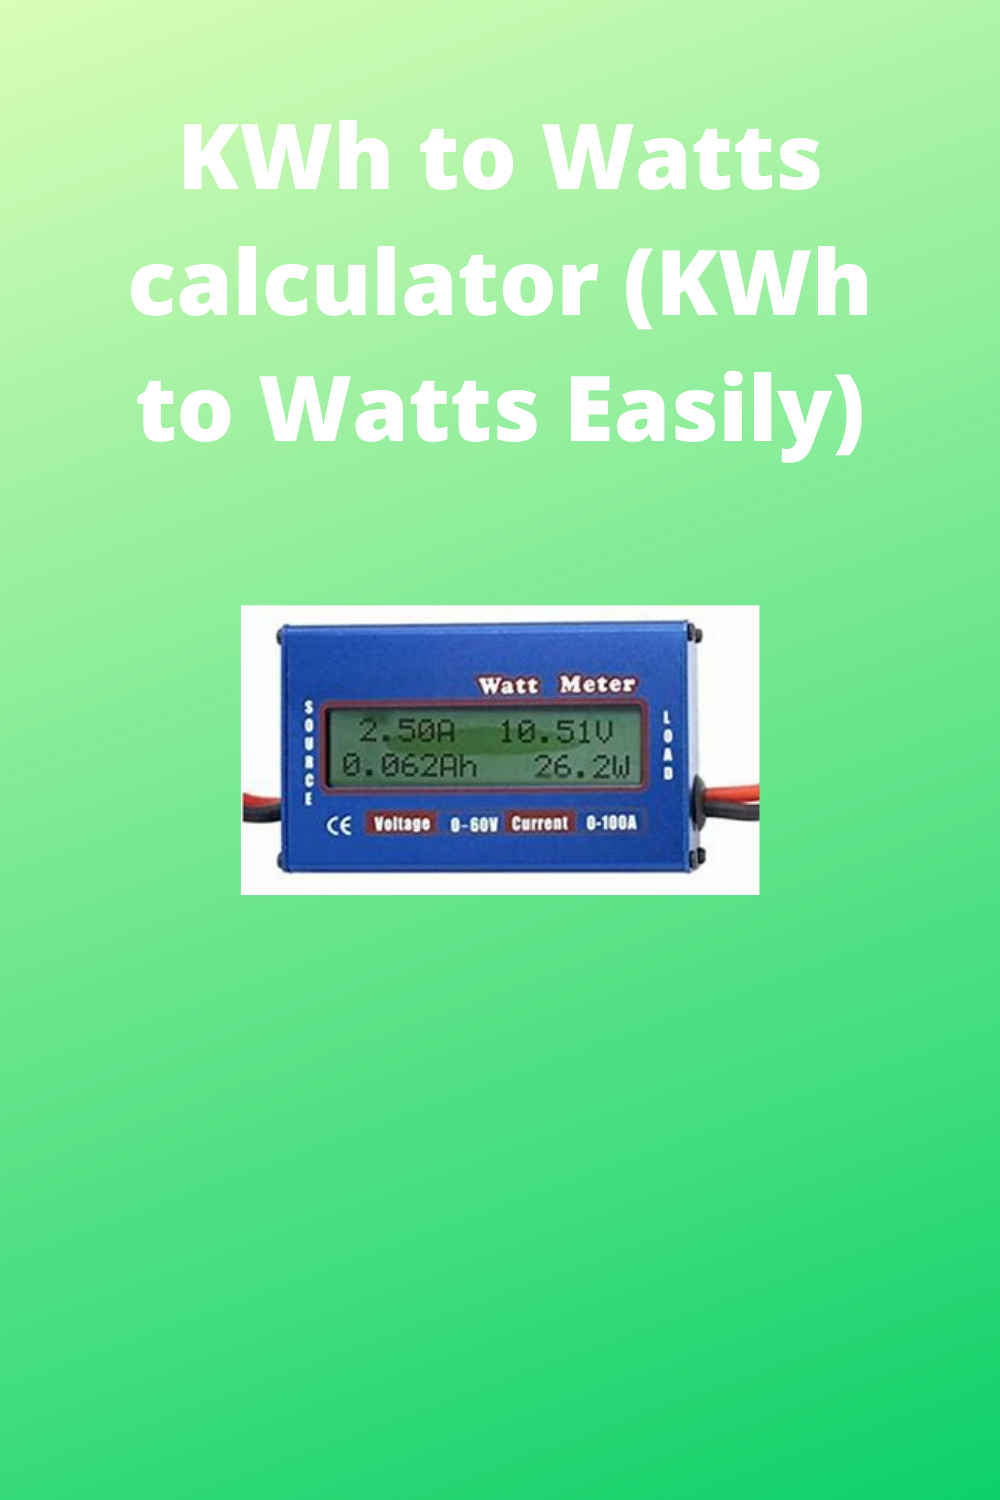 kwh-to-watts-calculator-kwh-to-watts-easily-easy-rapid-calcs